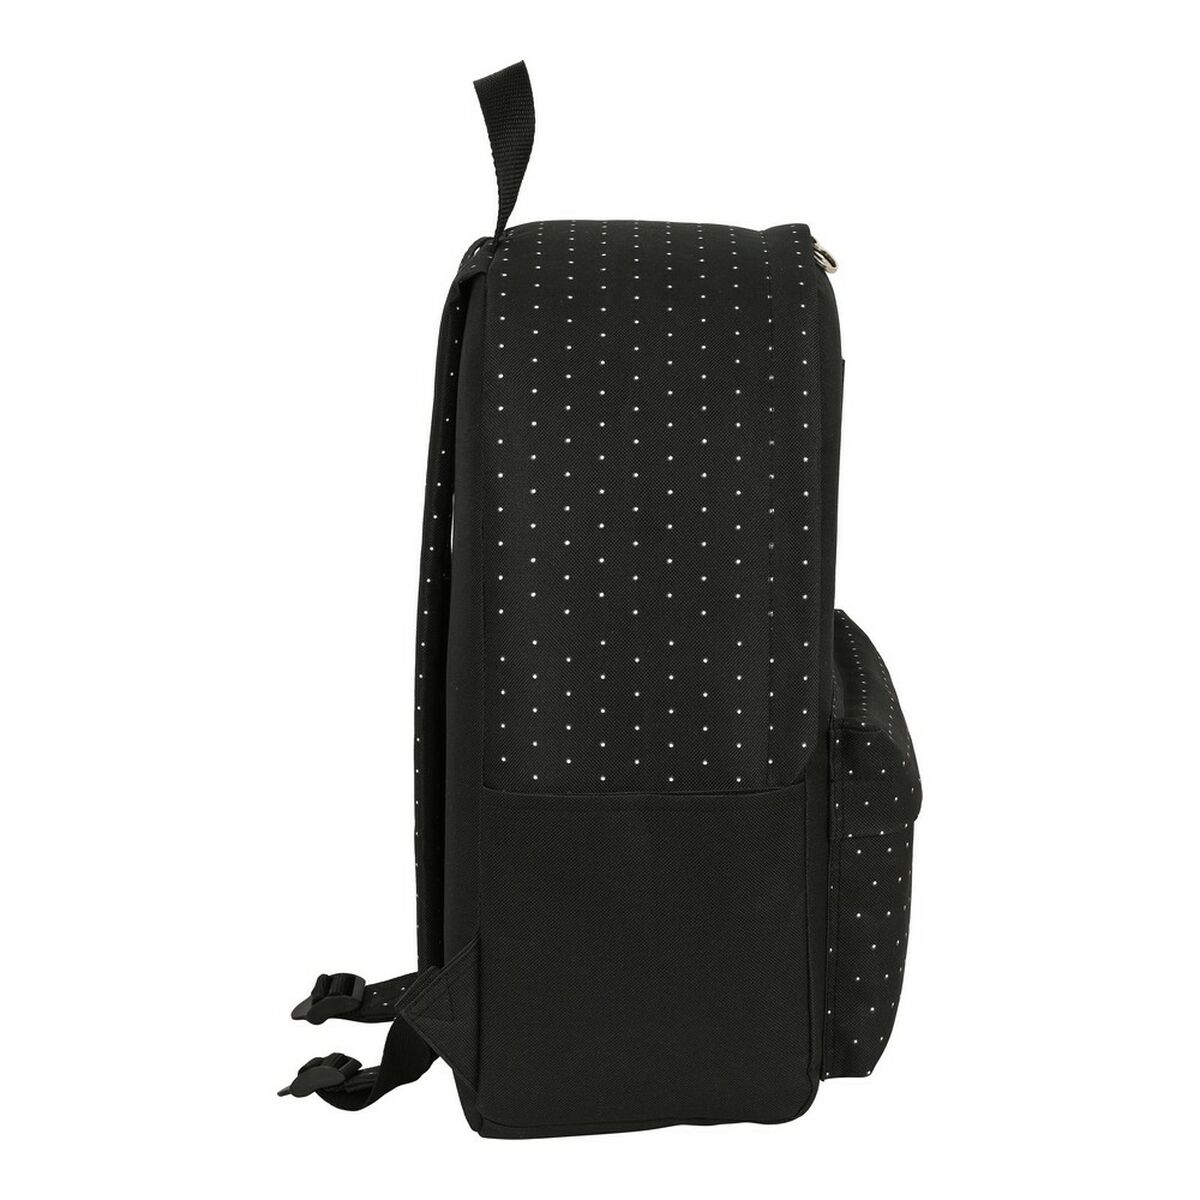 Laptop Backpack Minnie Mouse Specks Black (31 x 40 x 16 cm)